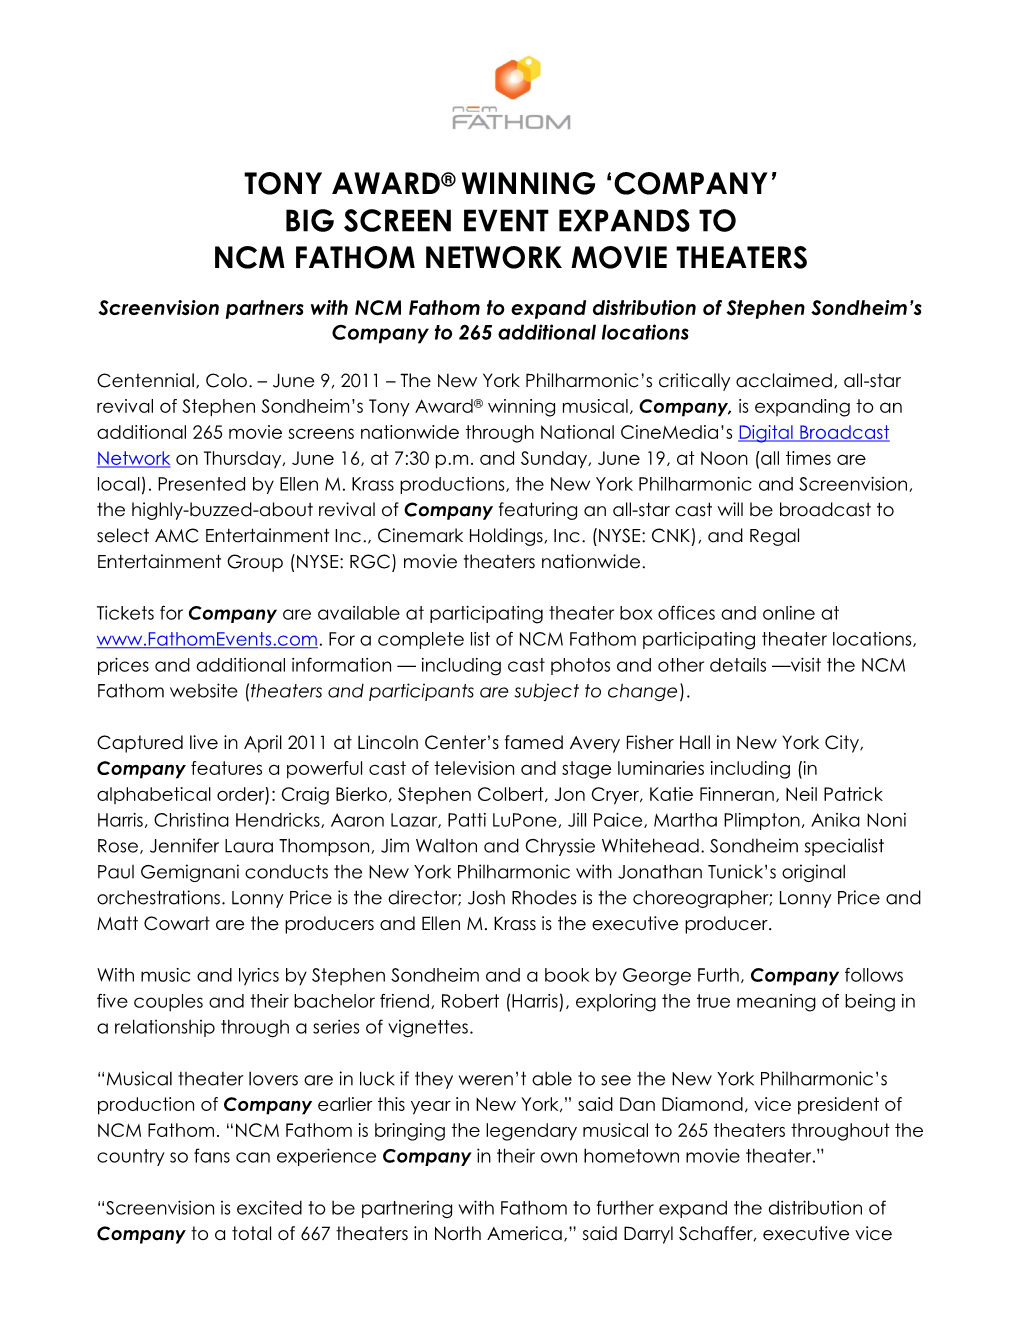 Tony Award® Winning 'Company' Big Screen Event